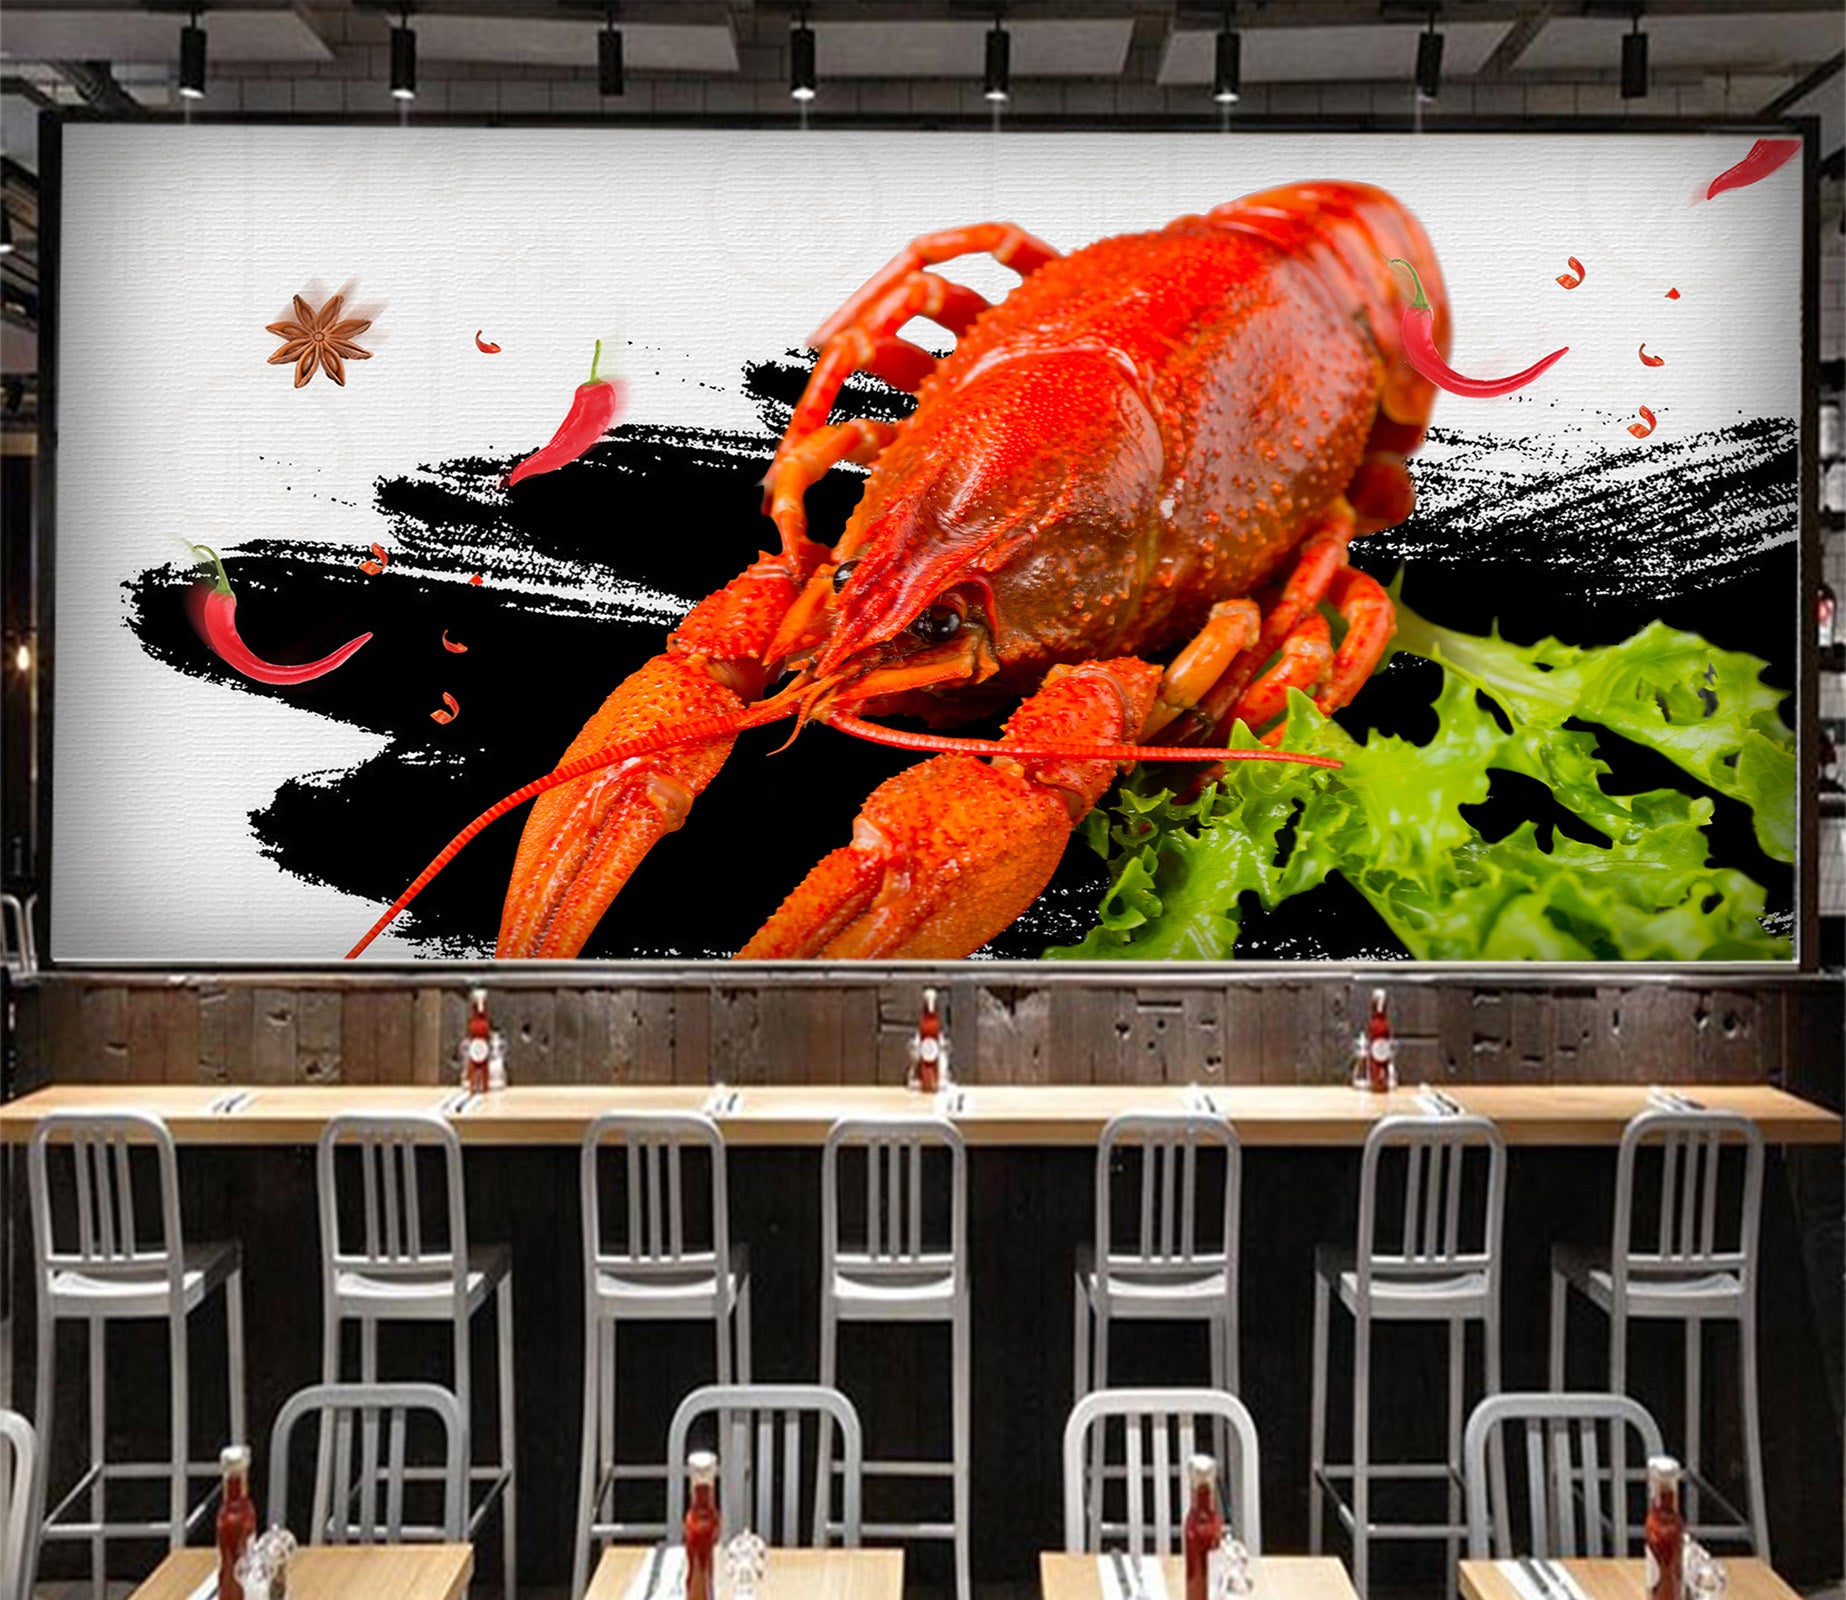 3D Spicy Lobster 051 Food Wall Murals Wallpaper AJ Wallpaper 2 